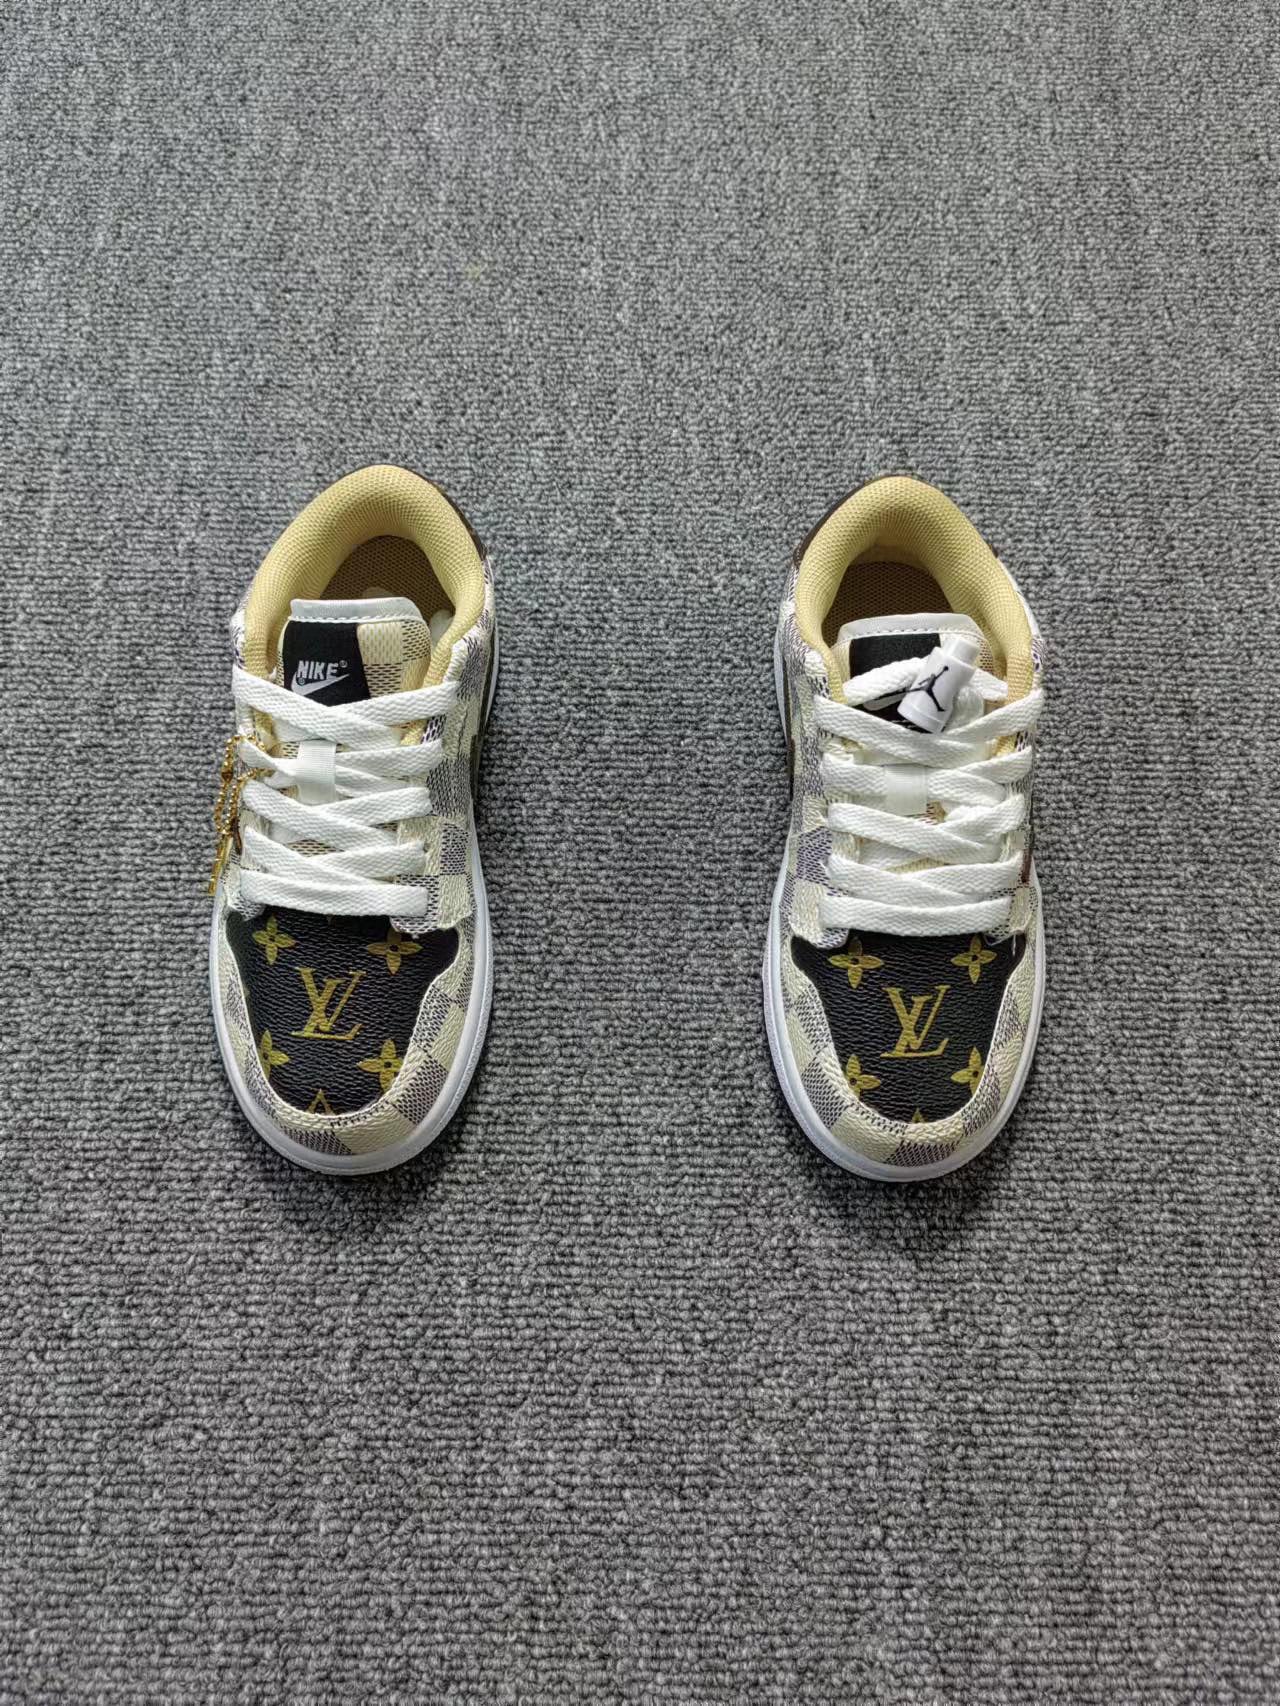 Baby Nike Jordan Lous Vuitton